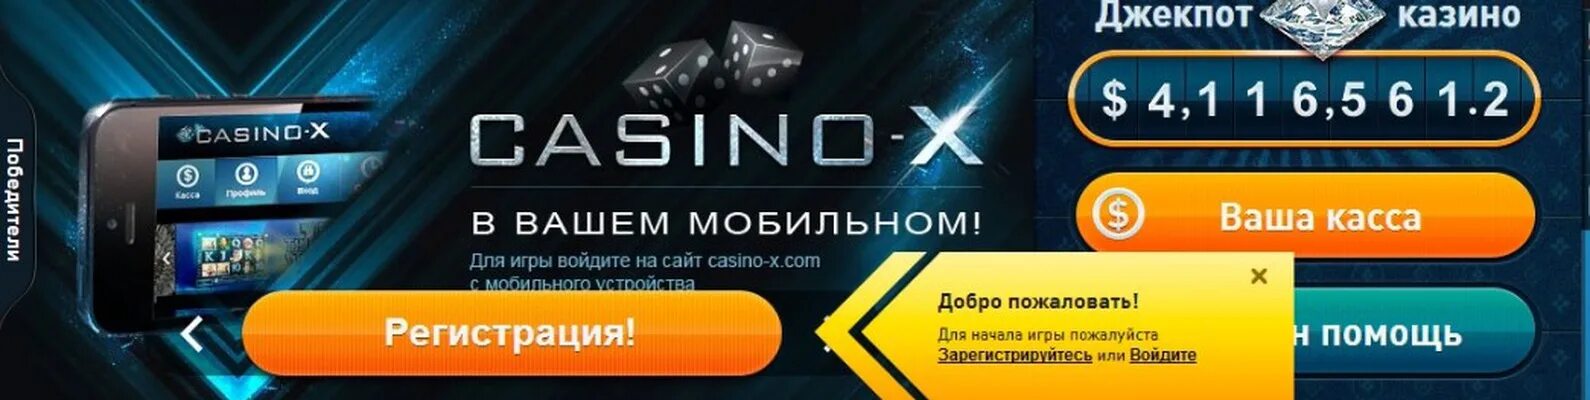 Казино х. Казино Икс Casino-x. Зеркало сайтов казино Икс.